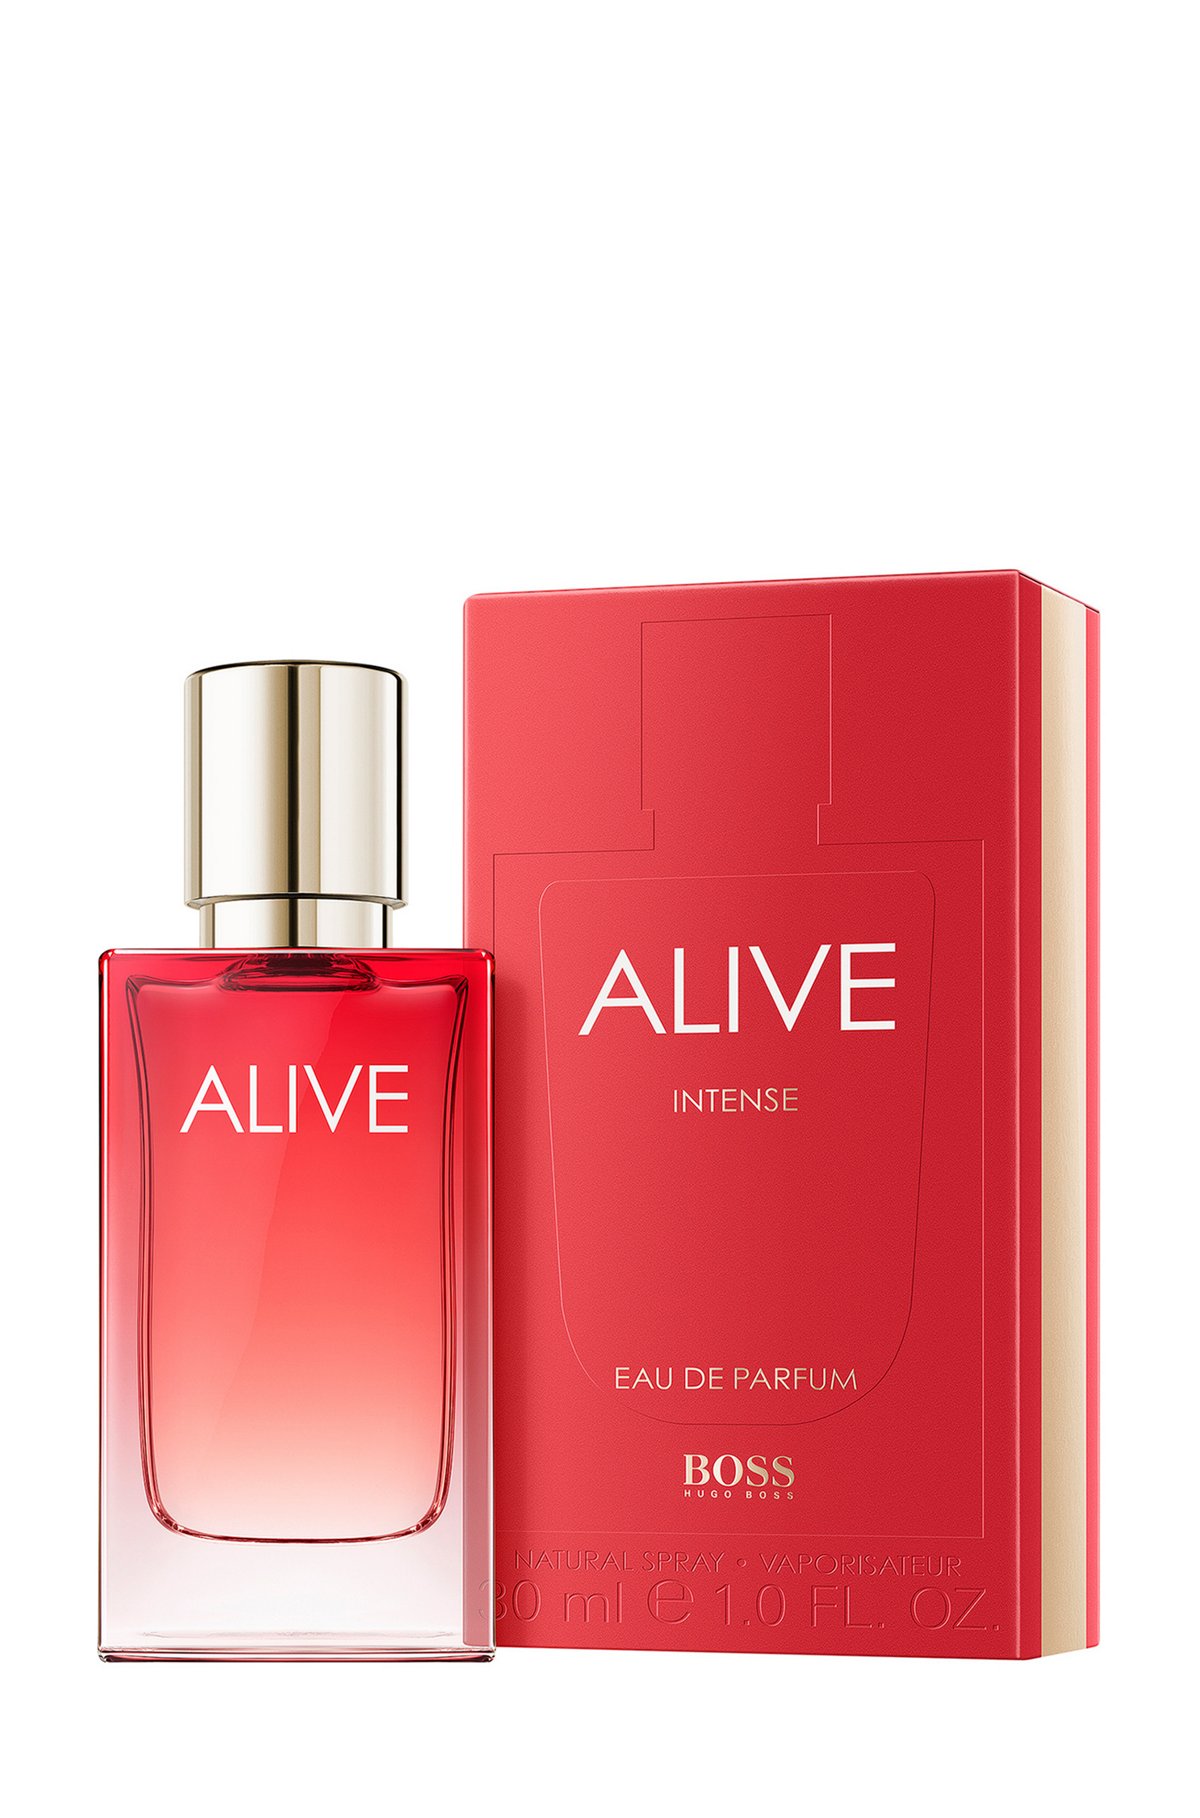 BOSS Alive Intense eau de parfum 30ml, Assorted-Pre-Pack